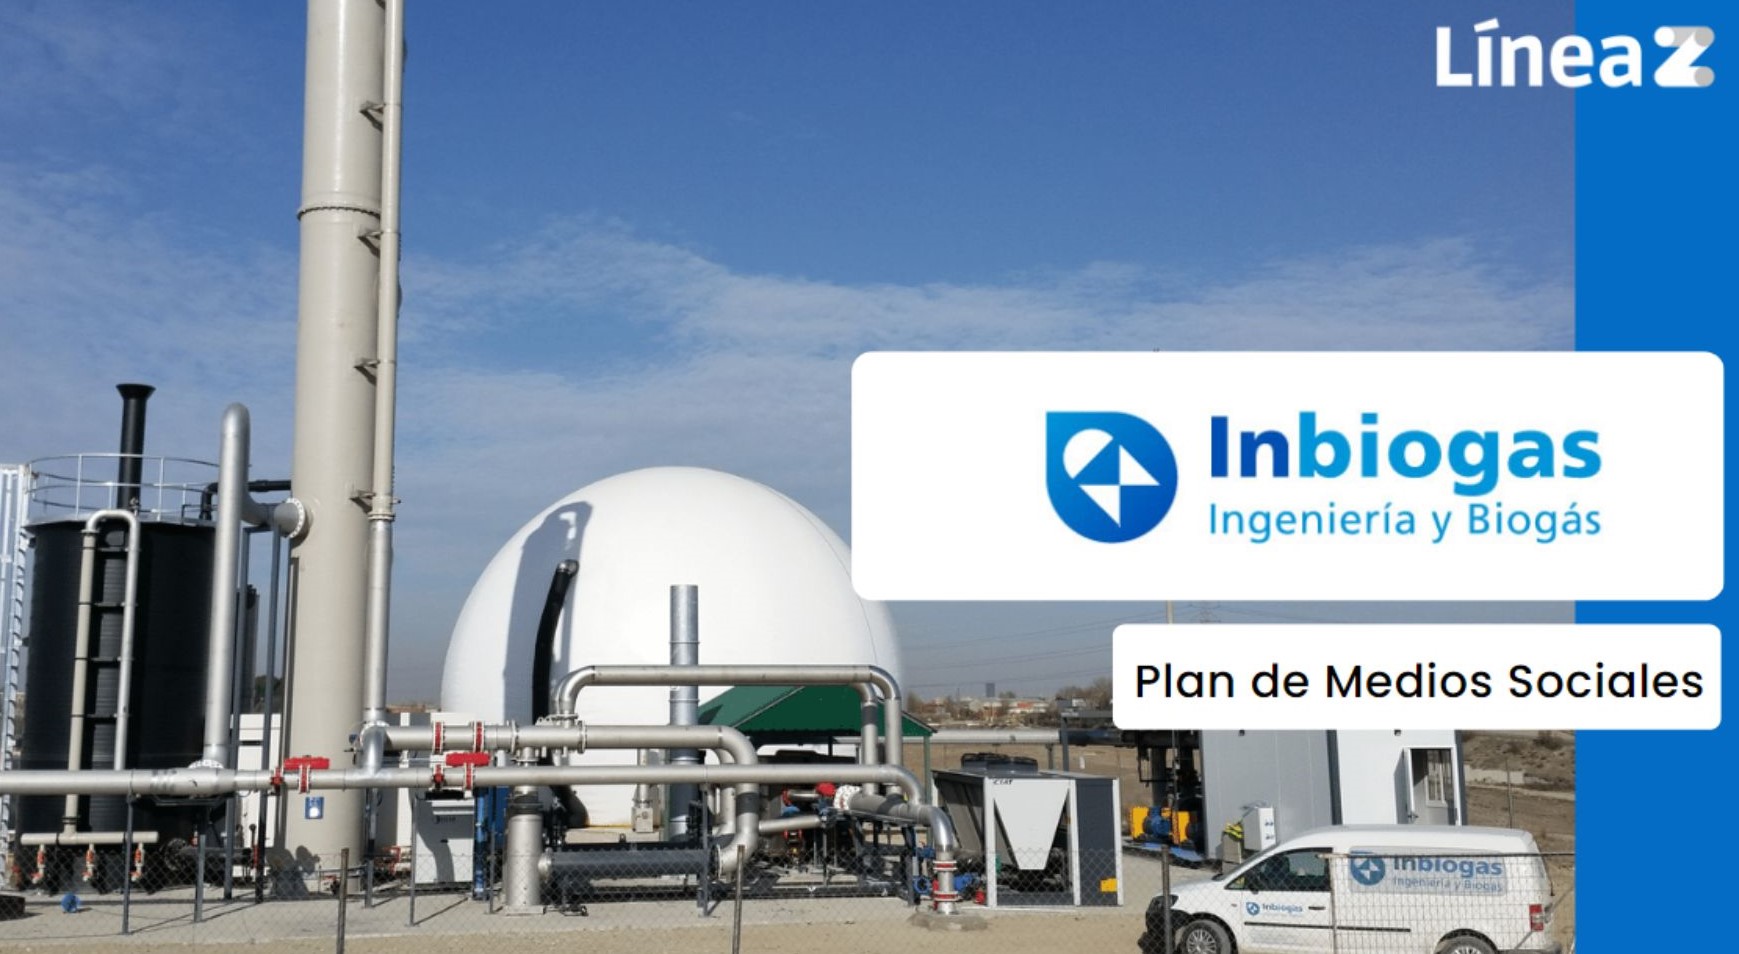 i LineaZ

D Inbiogas
Ingenieria y Biogas

 
  
 

1

‘ Plan de Medios Sociales
= H Ln irl

Soe hy 1 Bs .